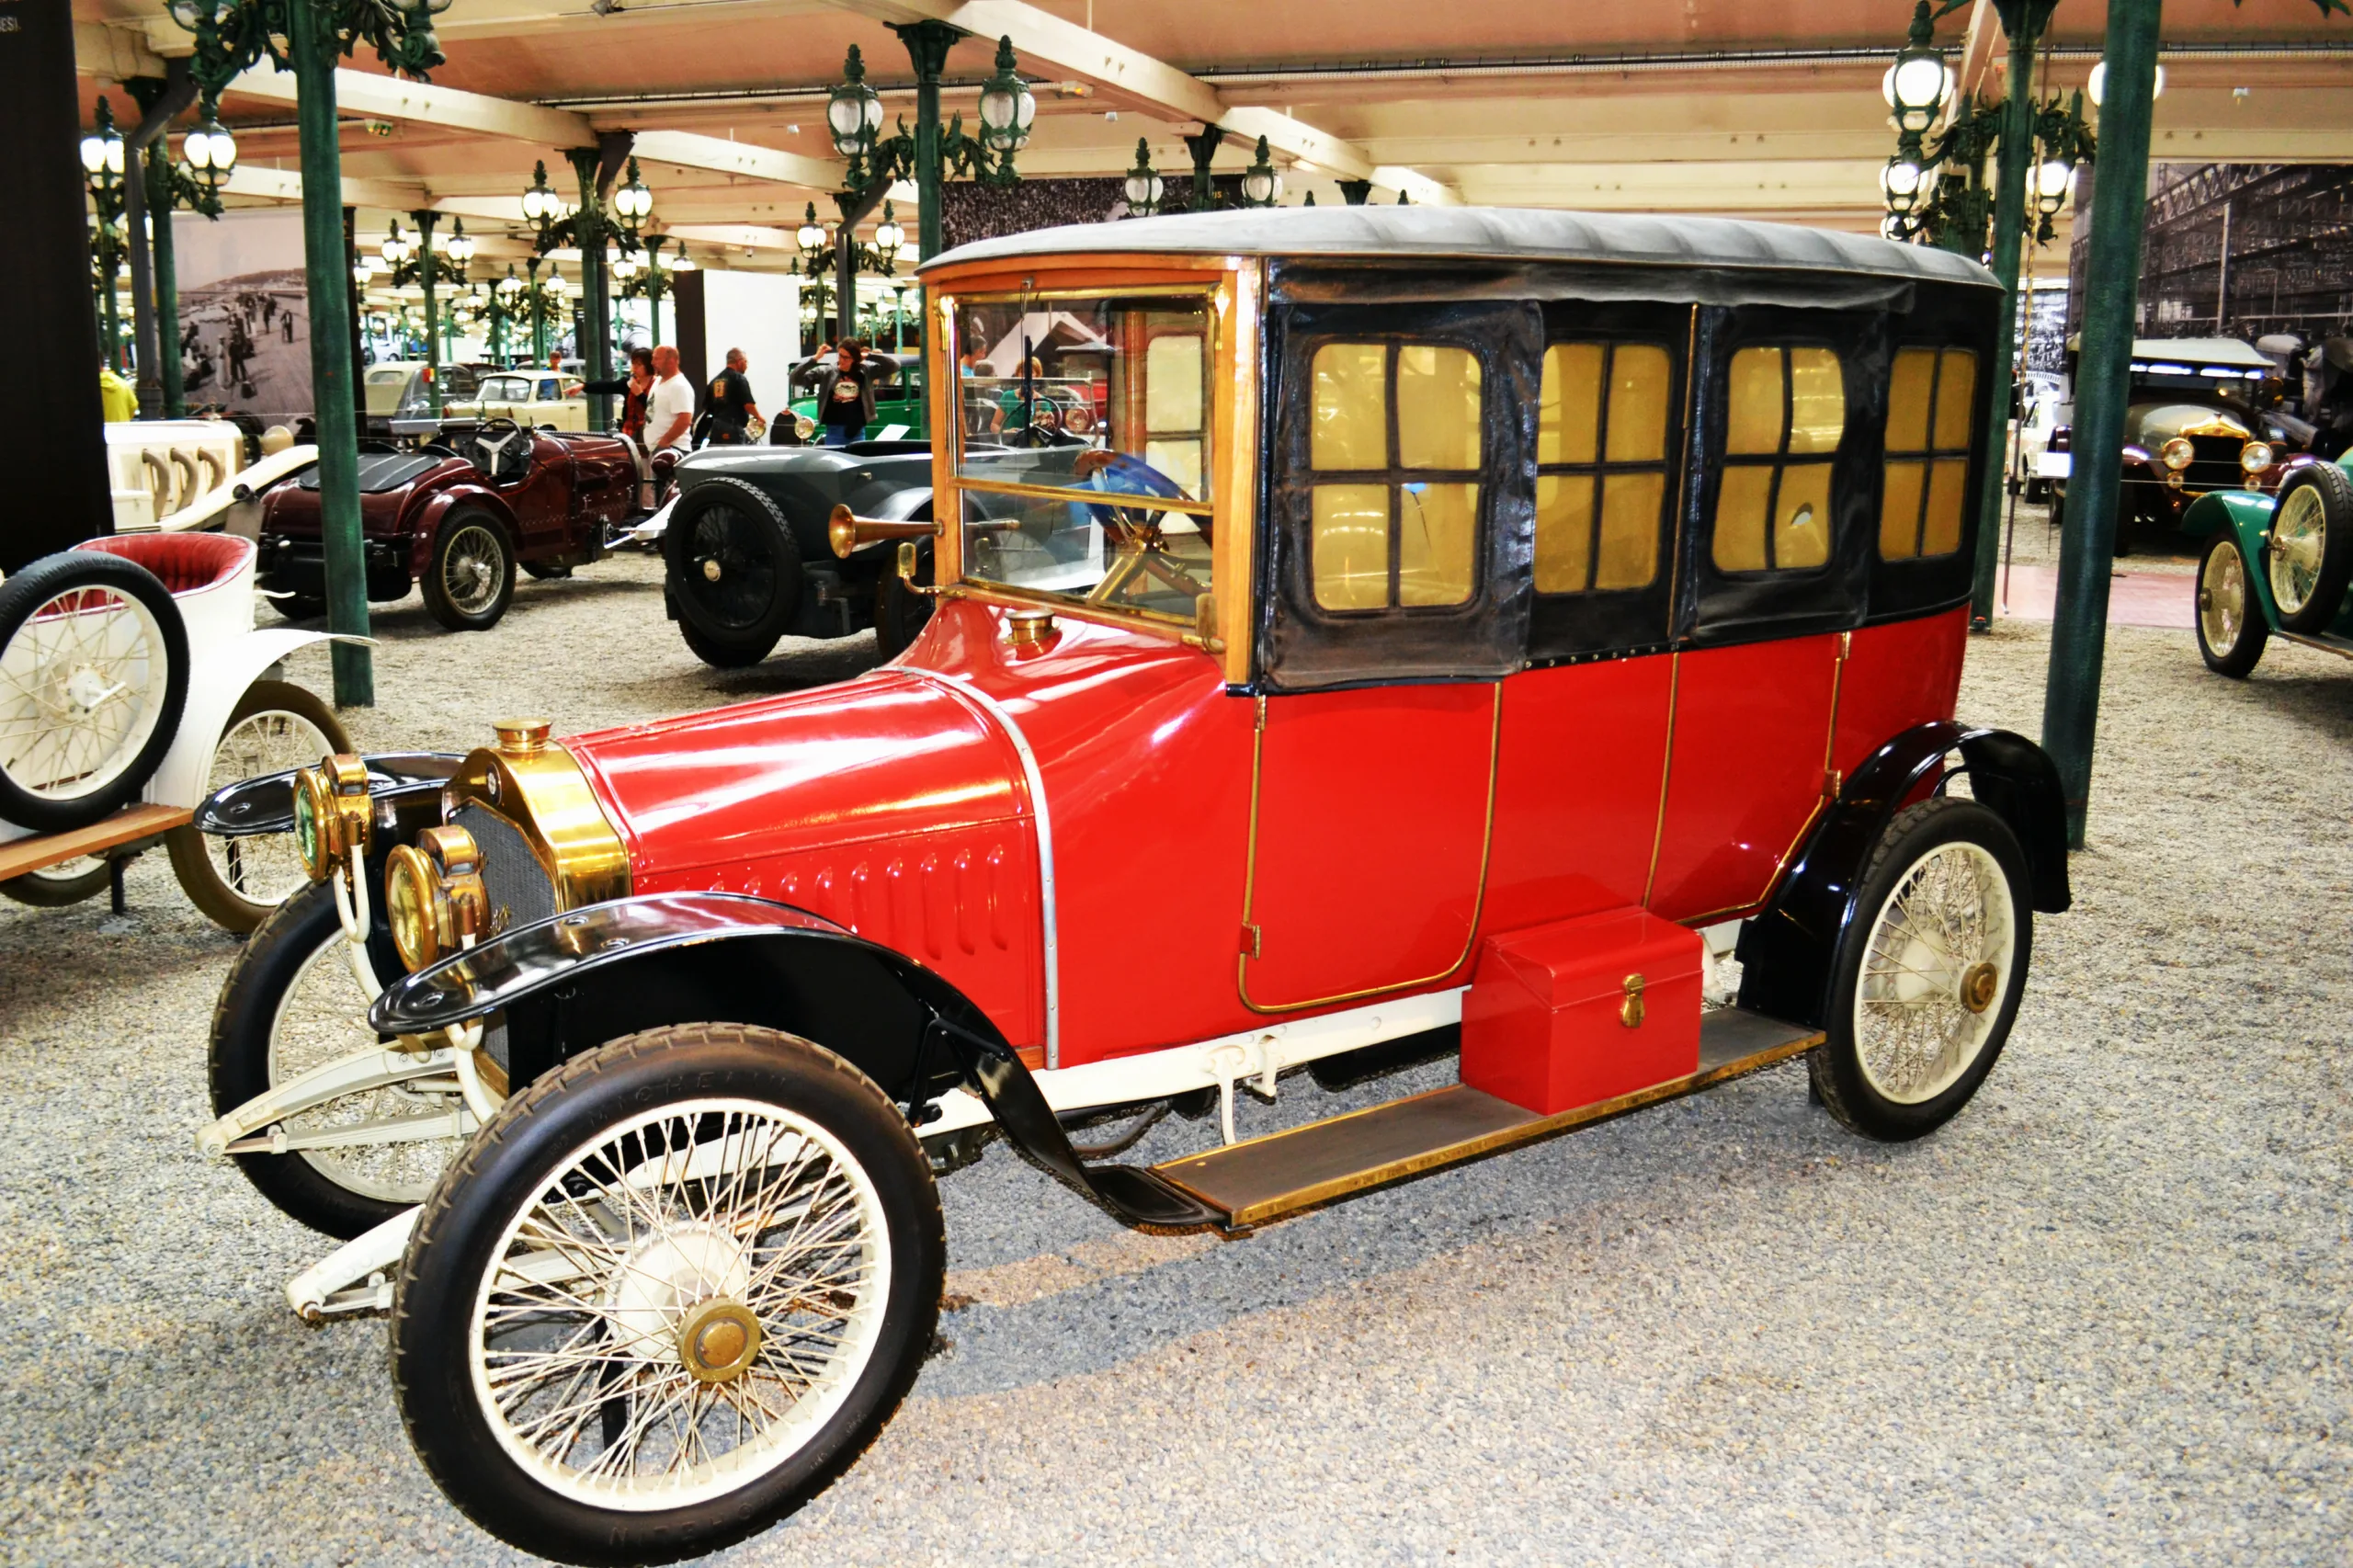 Cite de l’ Automobile, Μουσείο αυτοκινήτου στην Αλσατία 37